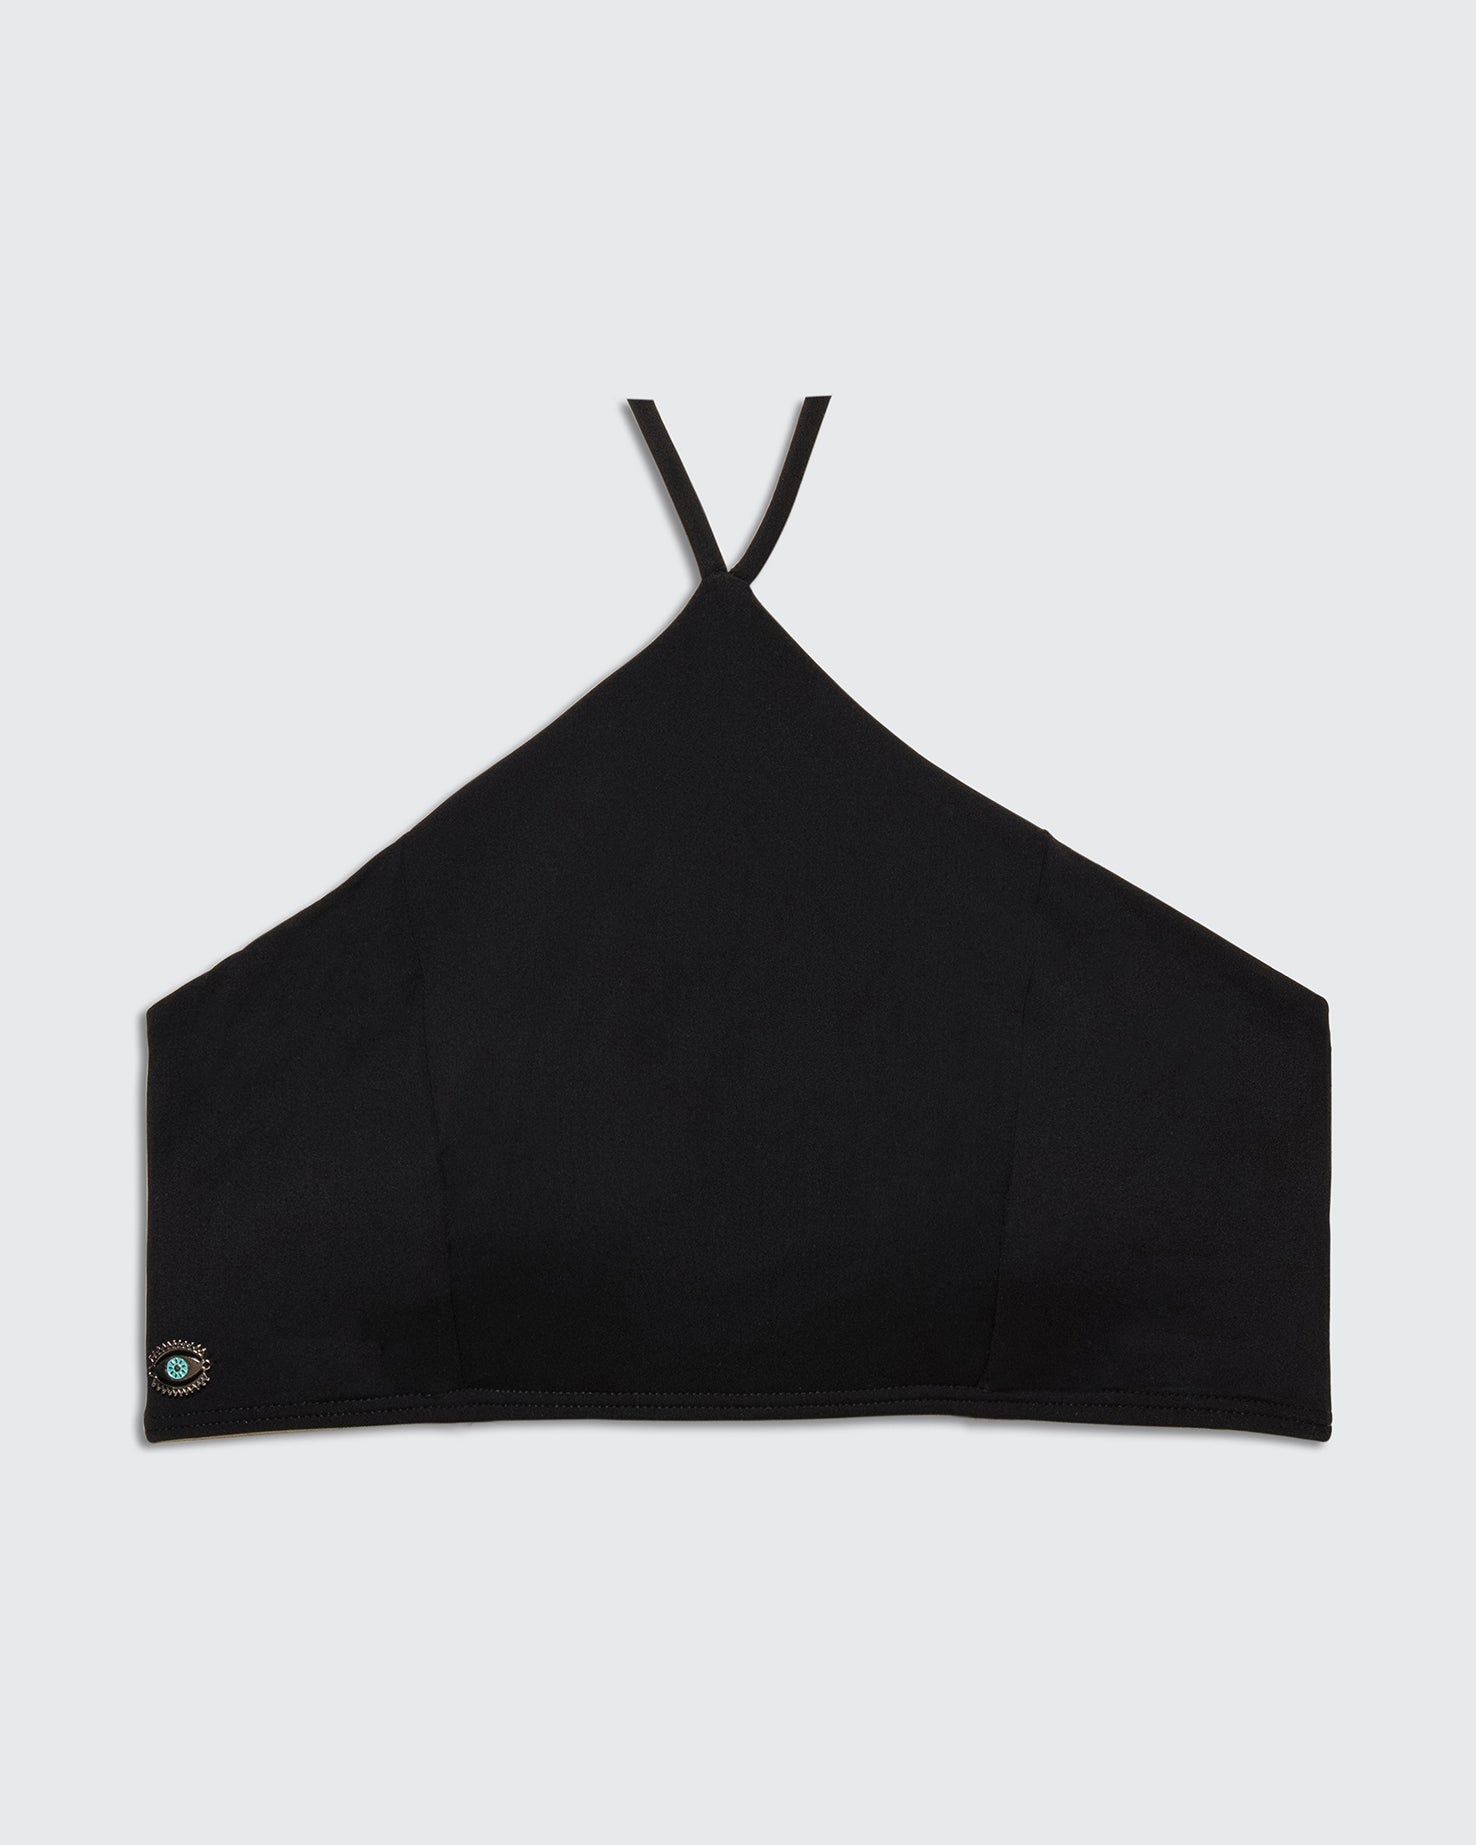 PACIFIC TOP BLACK - one piece -BiliBlond Swimwear